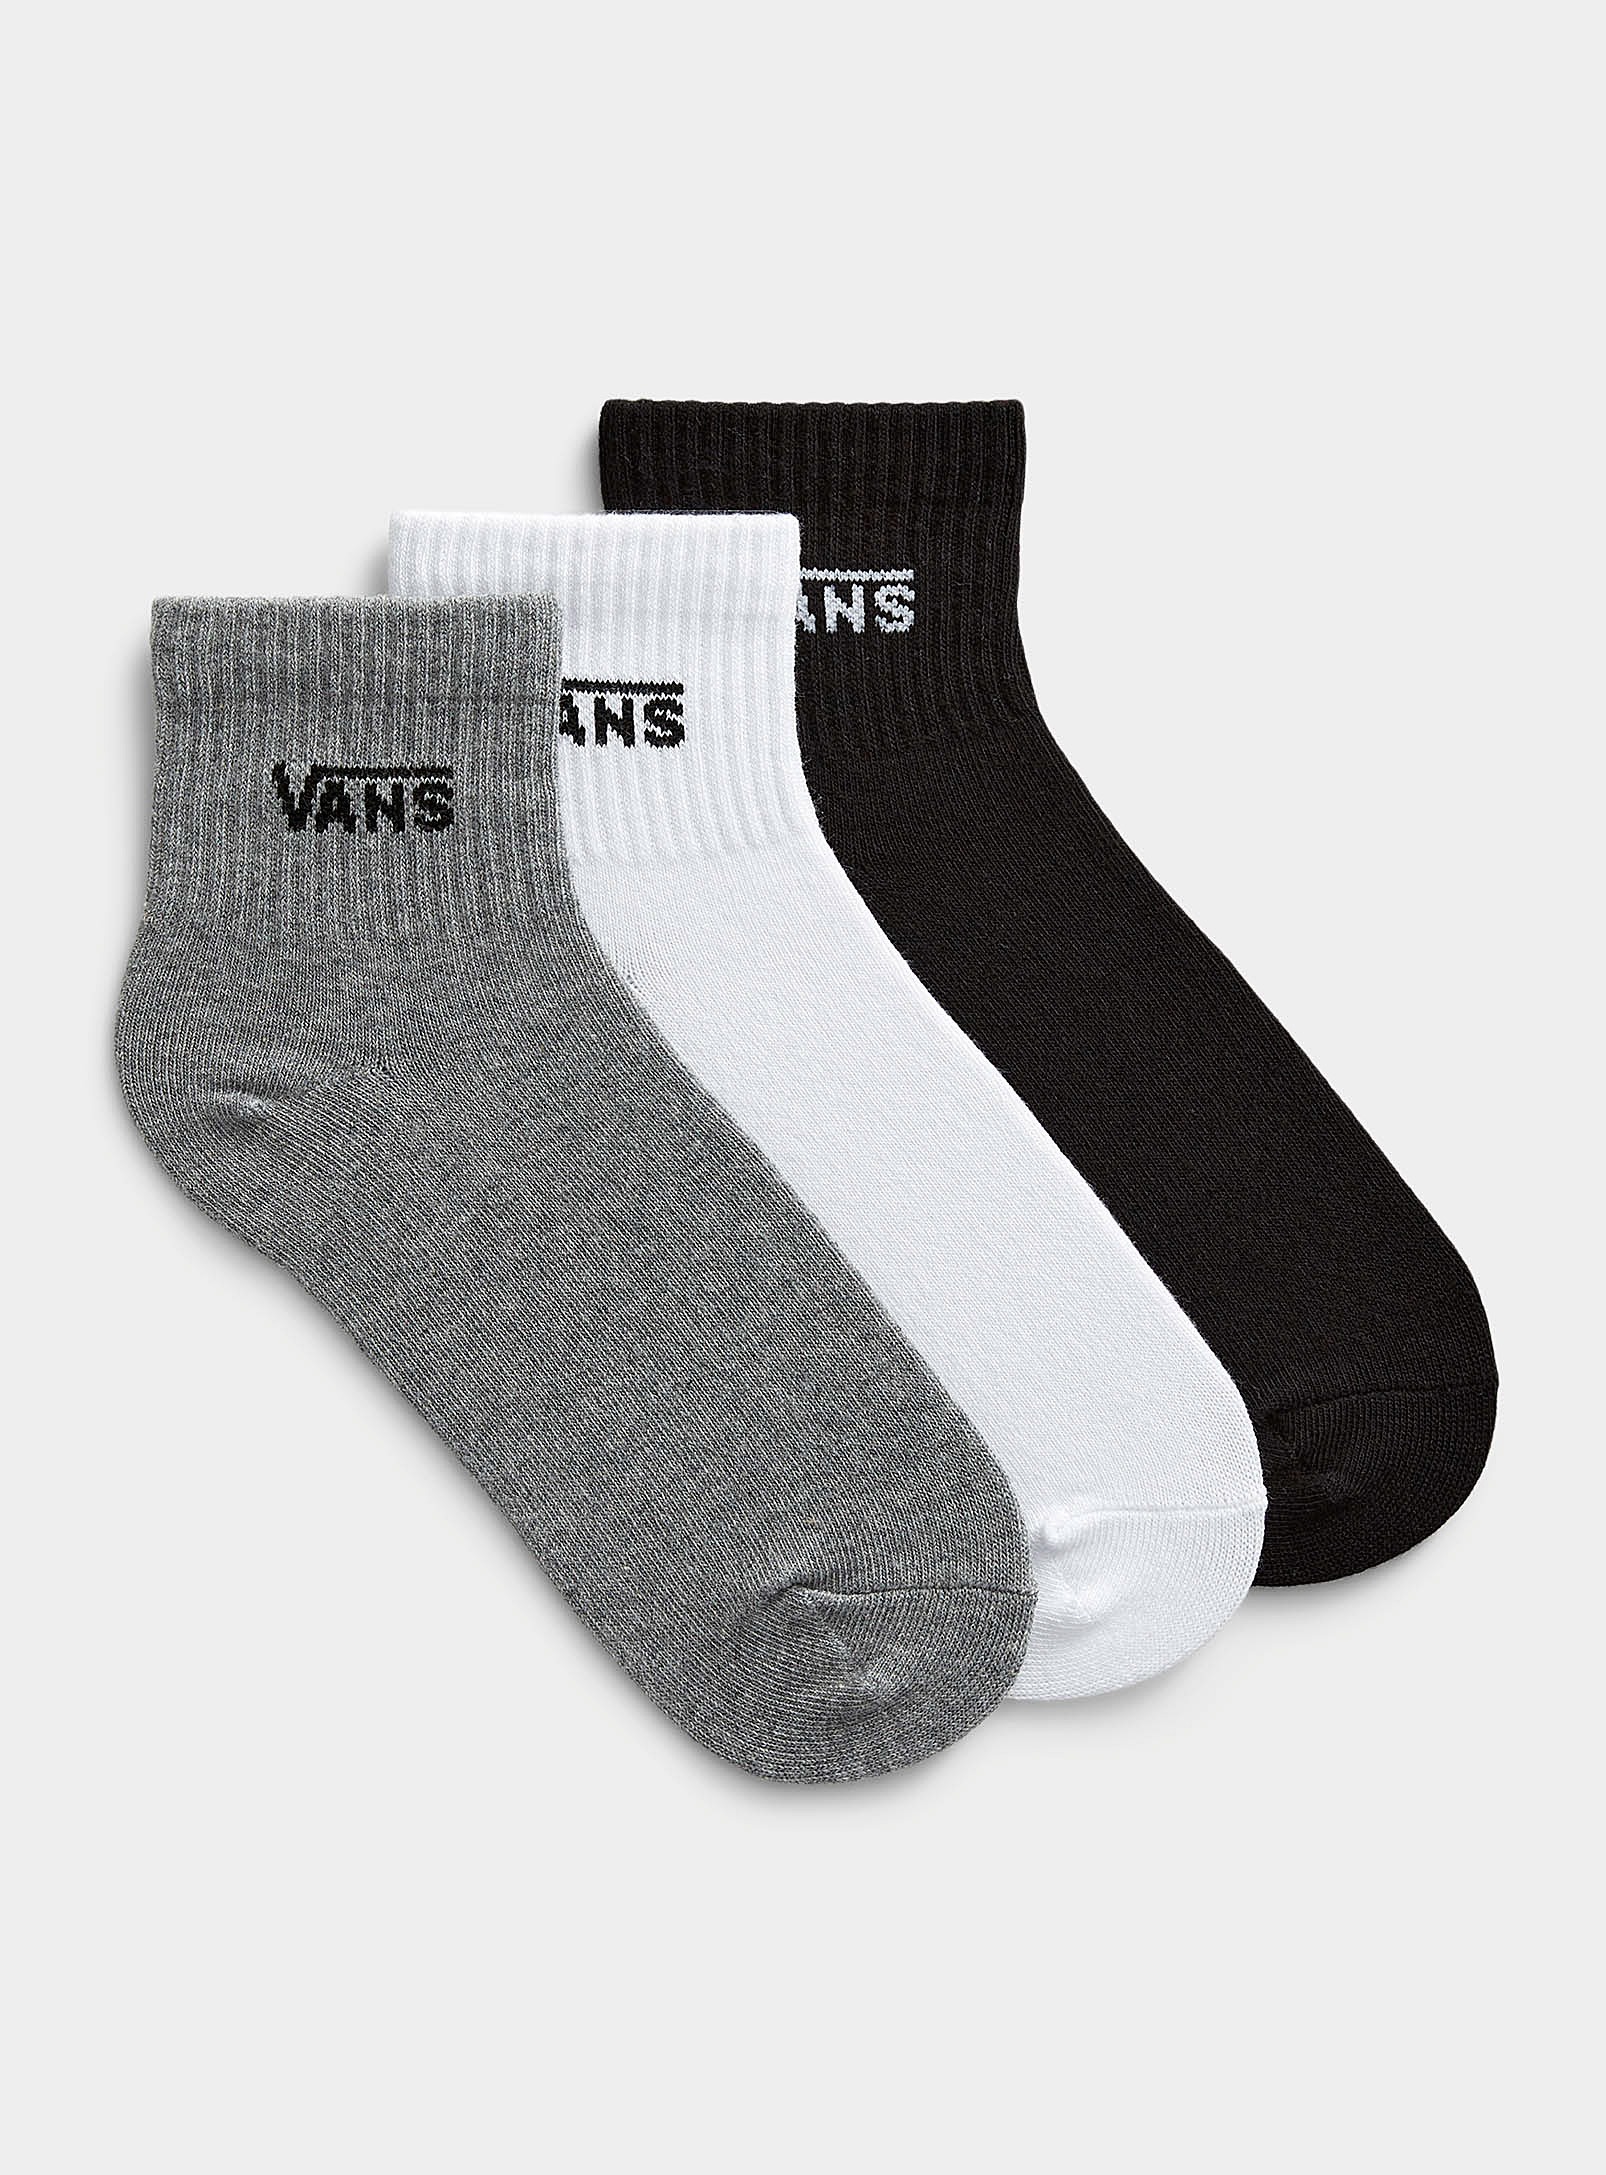 Vans - Women's Signature ankle socks Set of 3